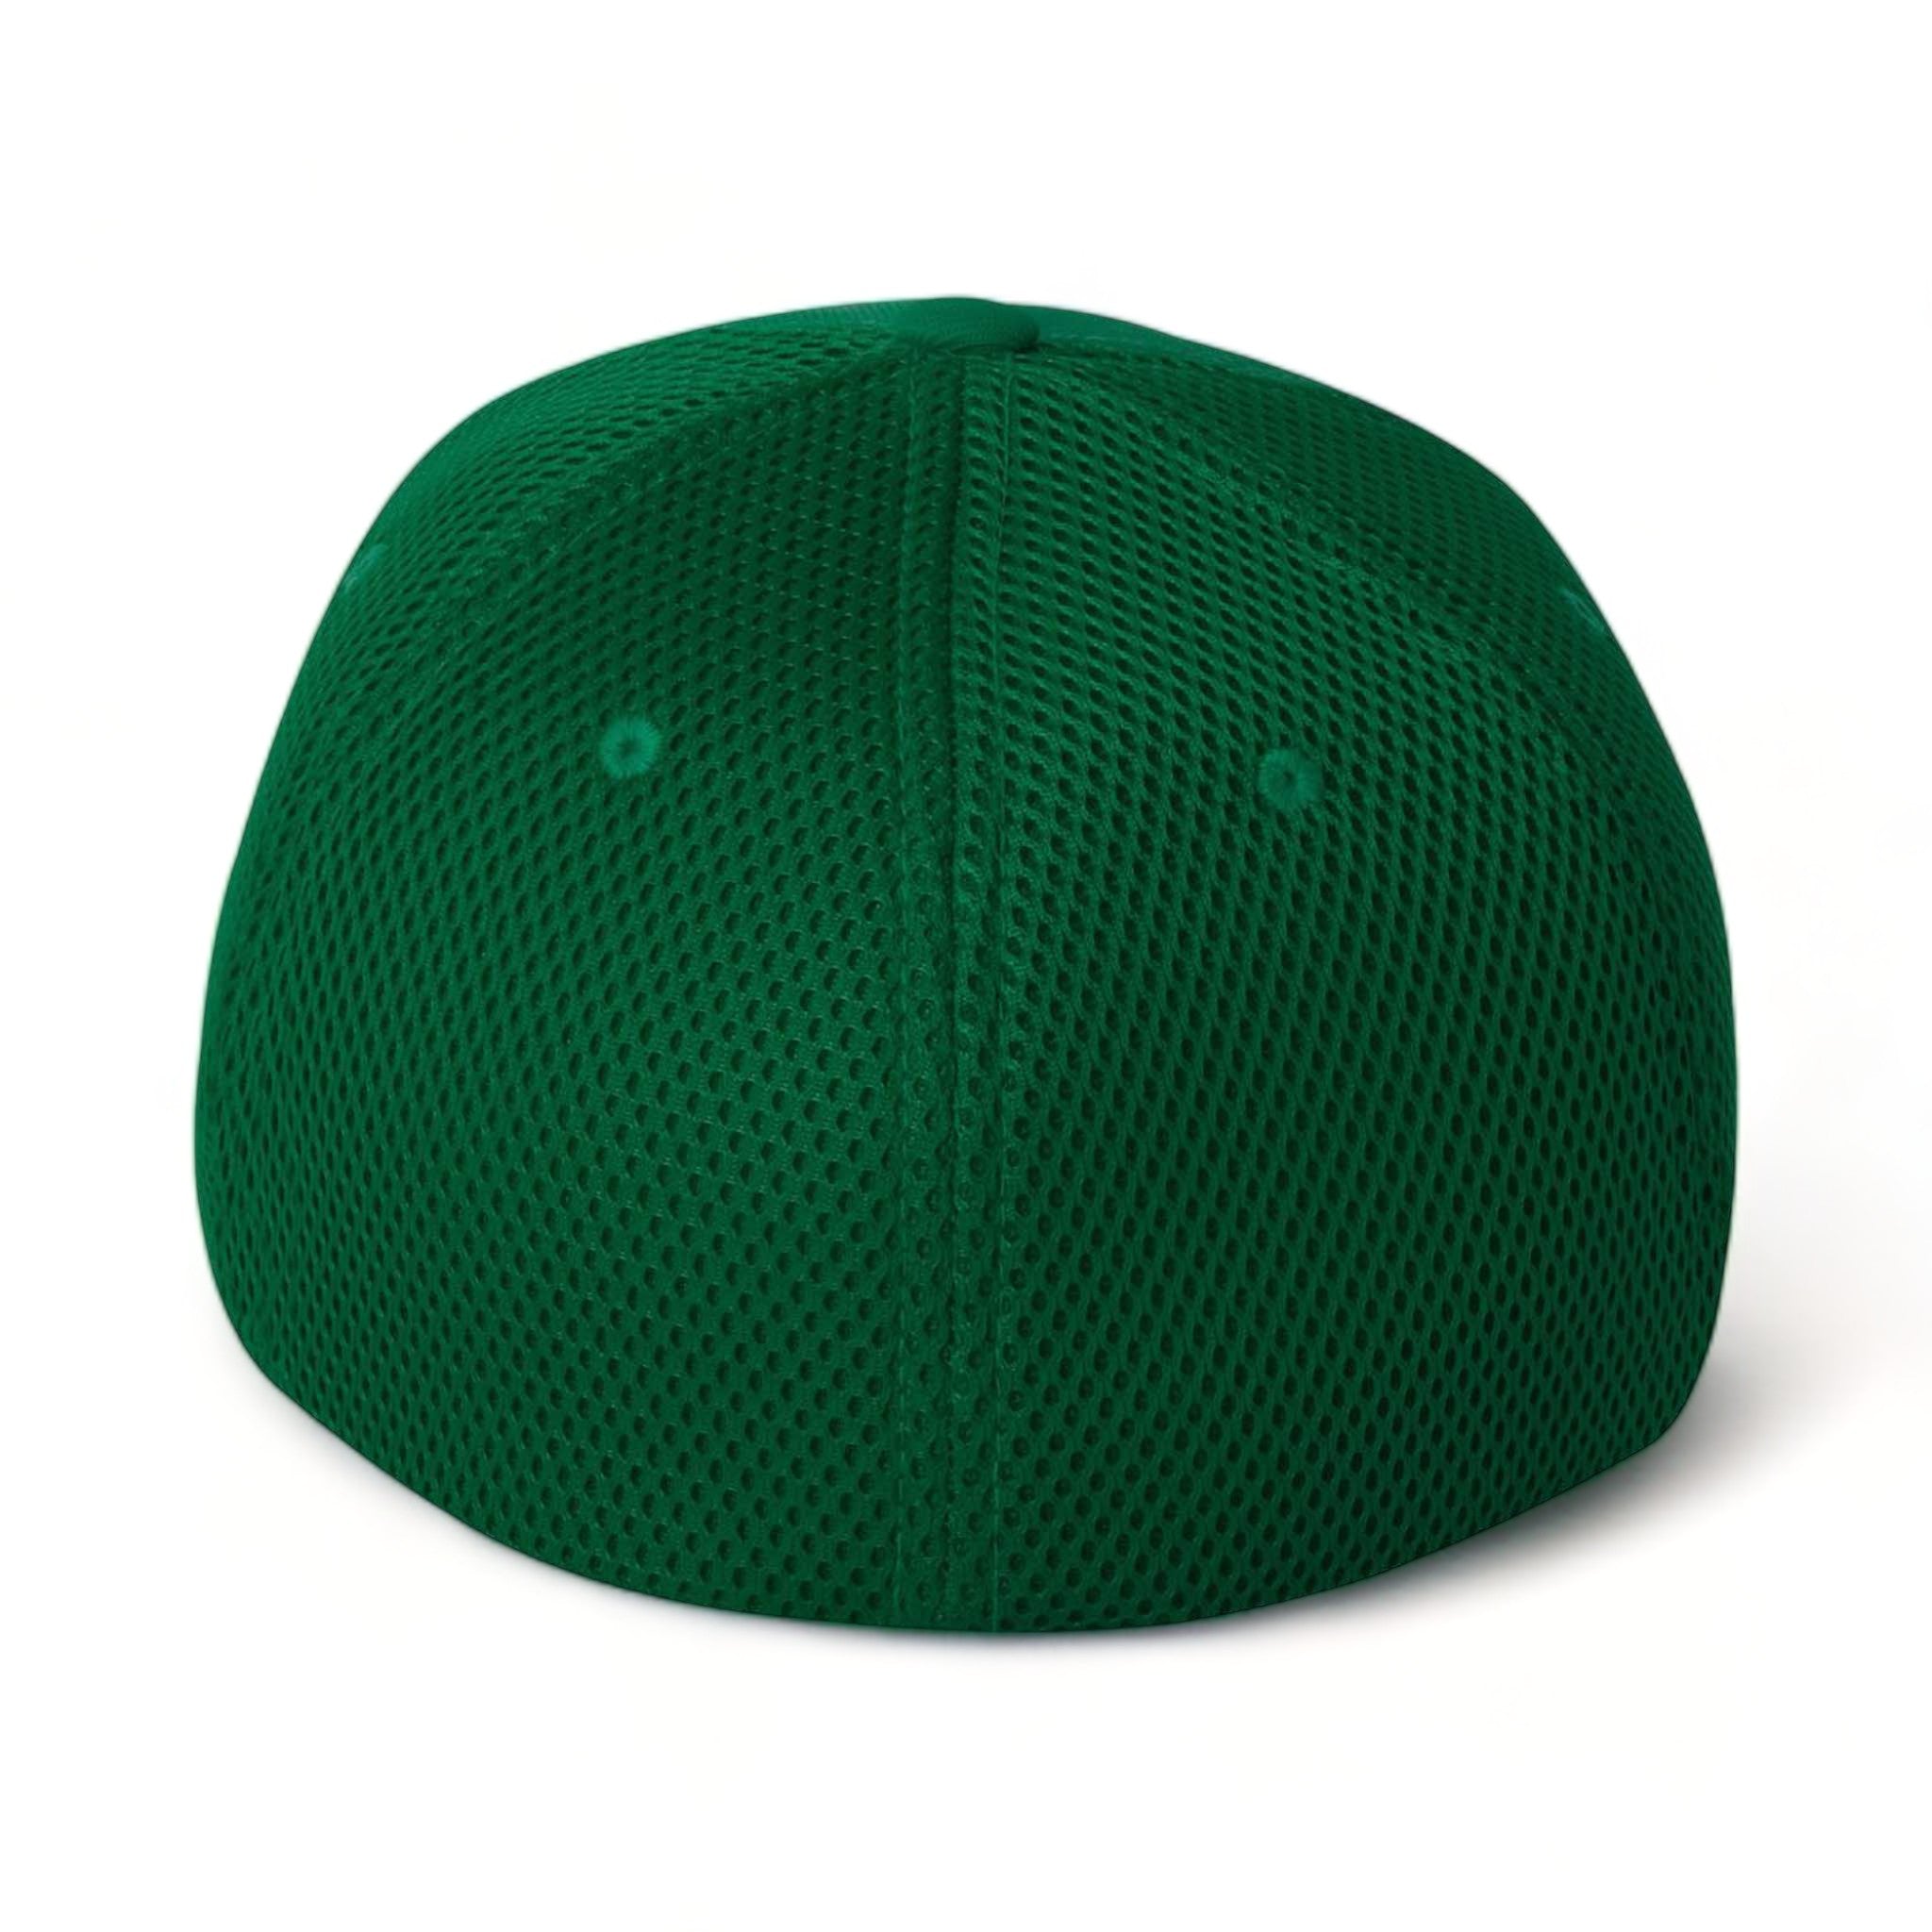 Back view of Flexfit 6533 custom hat in green